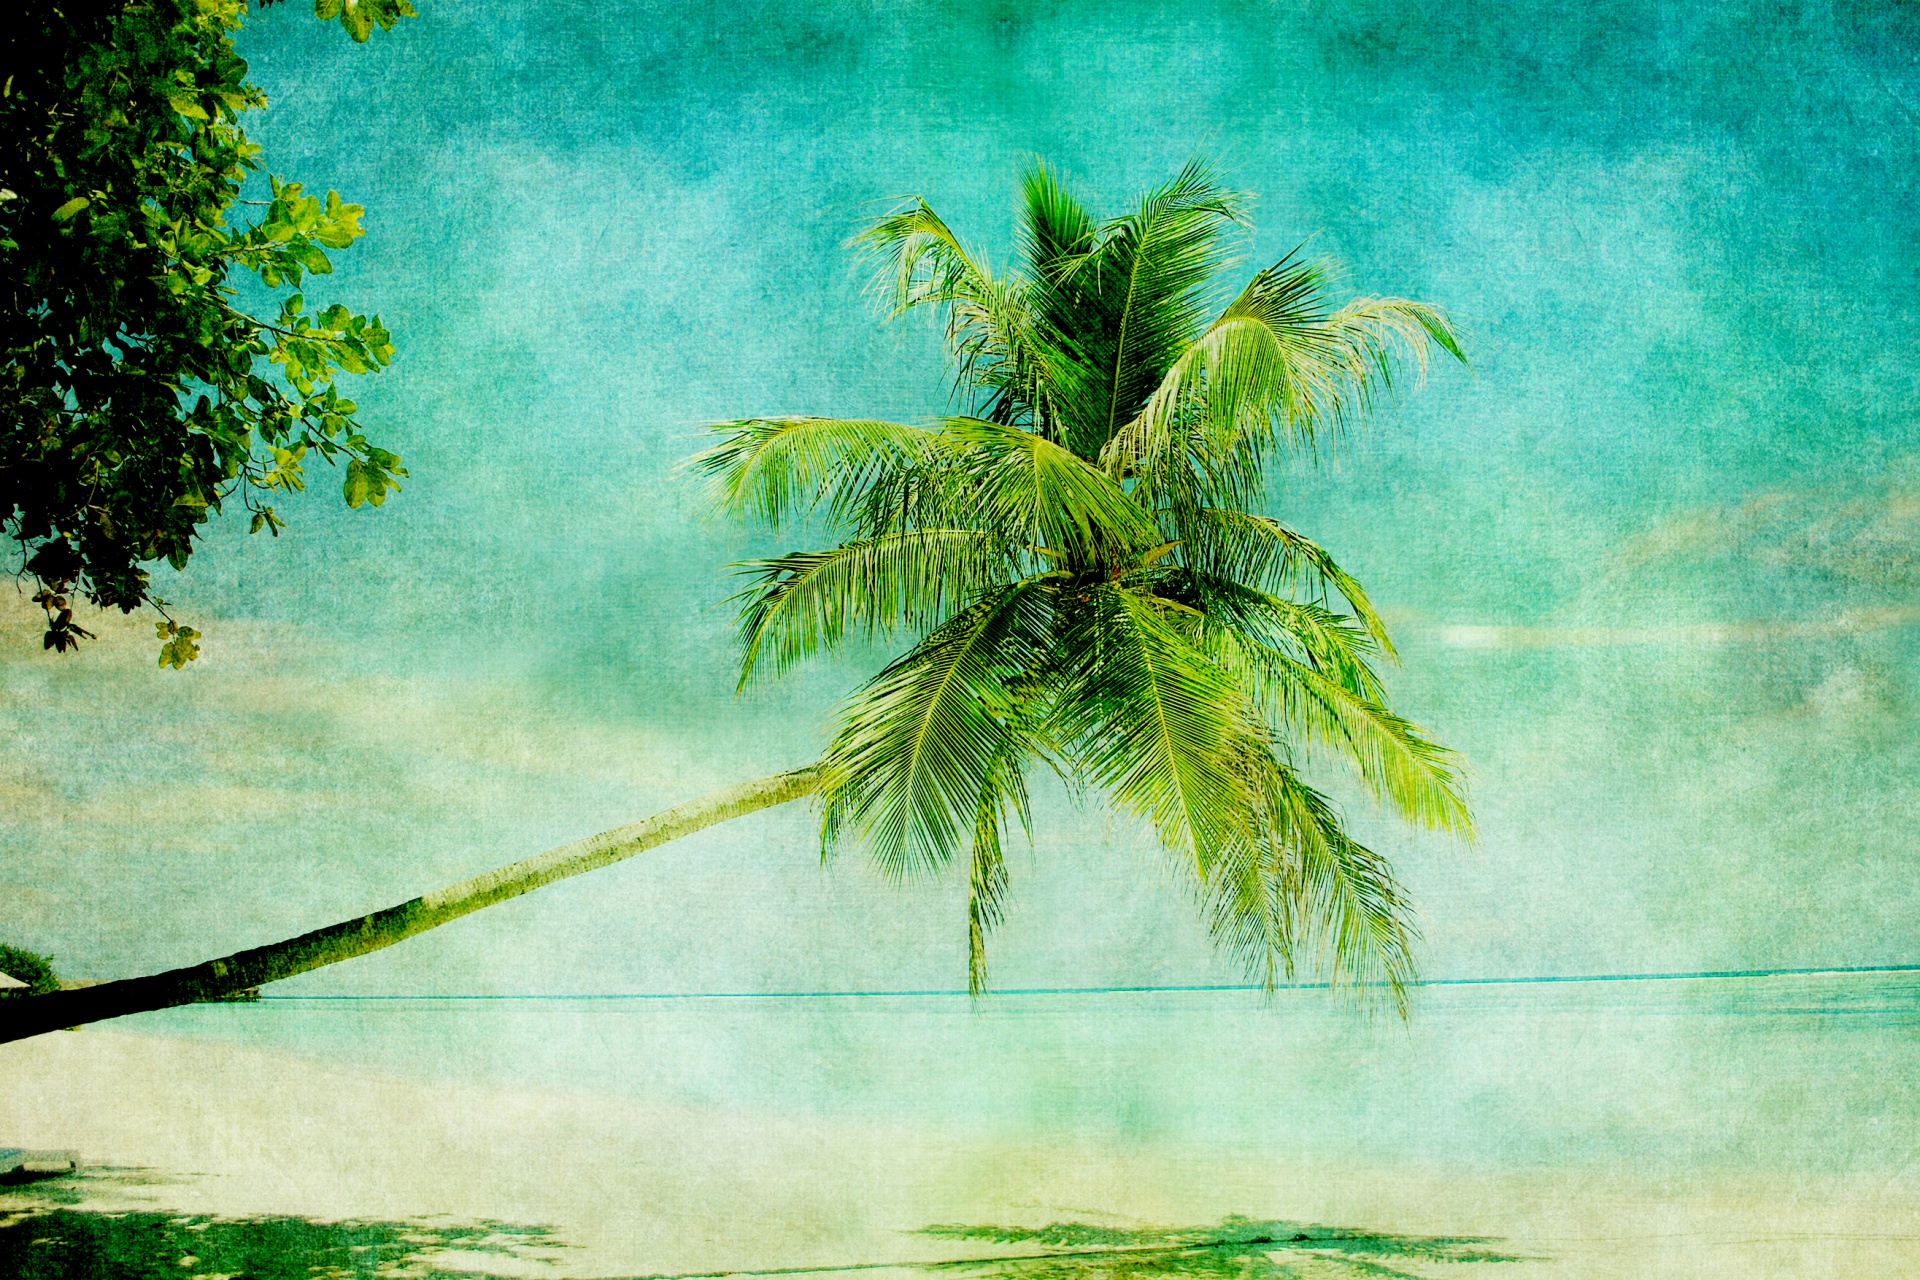 Palm,tree,beach,tropical,palm tree - free image from needpix.com